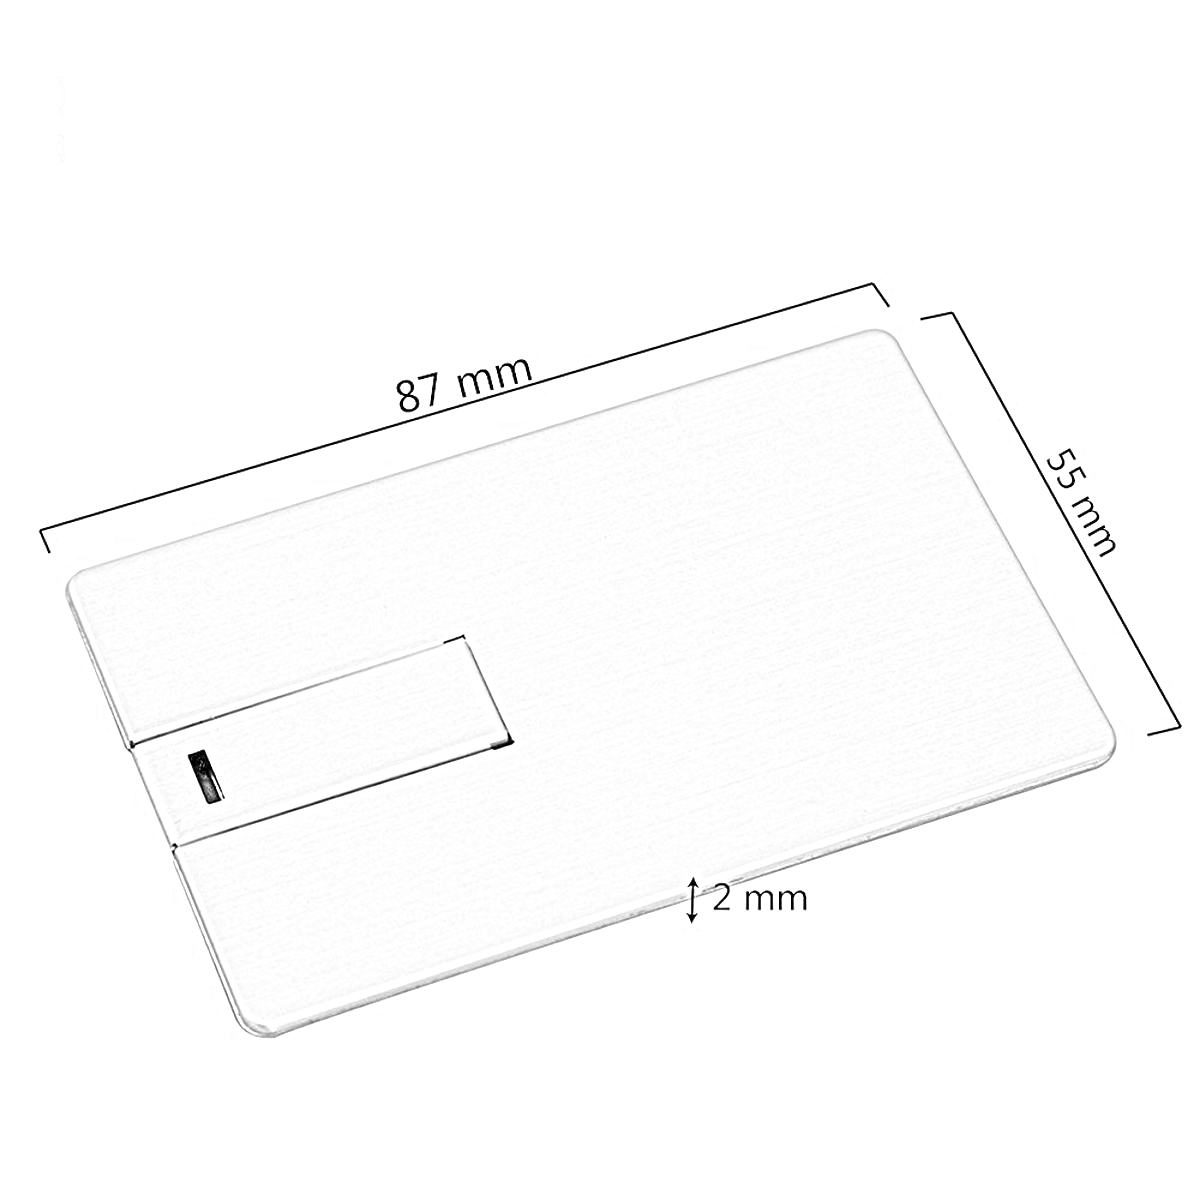 USB GERMANY GB) Metall-Kreditkarte (Blau, 8 USB-Stick ®